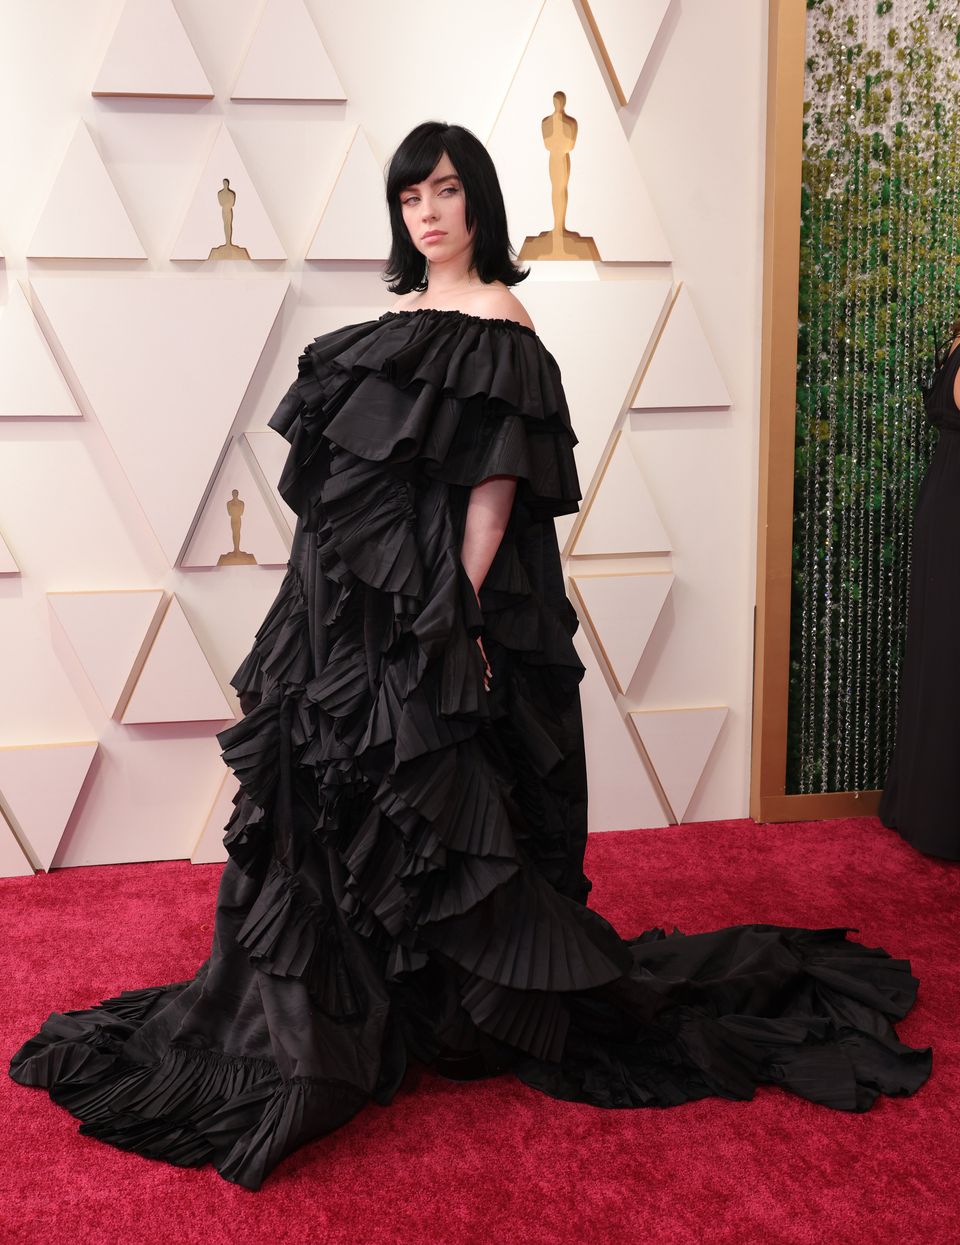 Shirtless Timothée Chalamet Just Rewrote the Oscars Dress Code